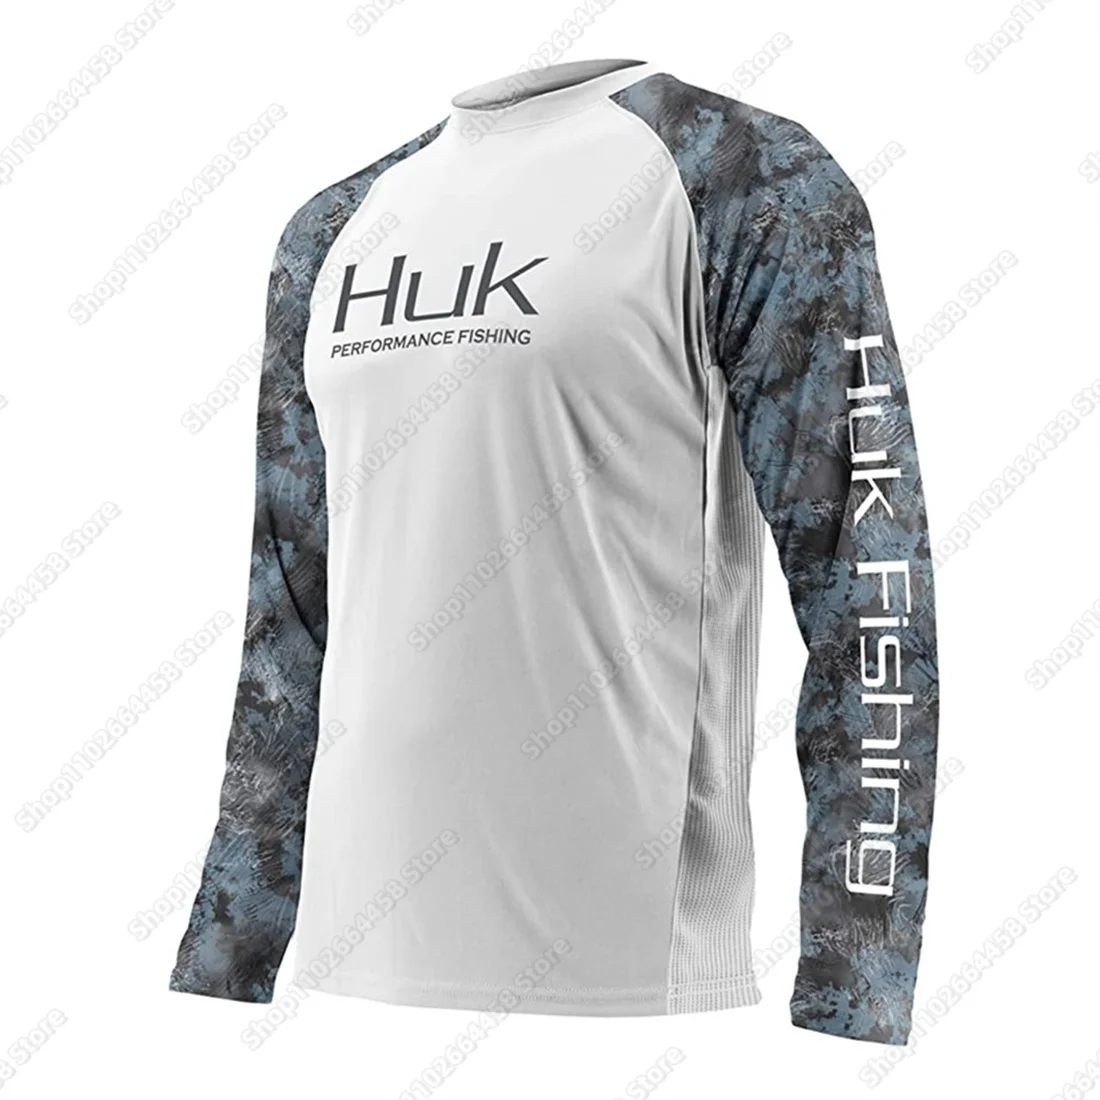 HUK Fishing Shirt Uv Protection Long Sleeve Fishing Clothes UPF 50